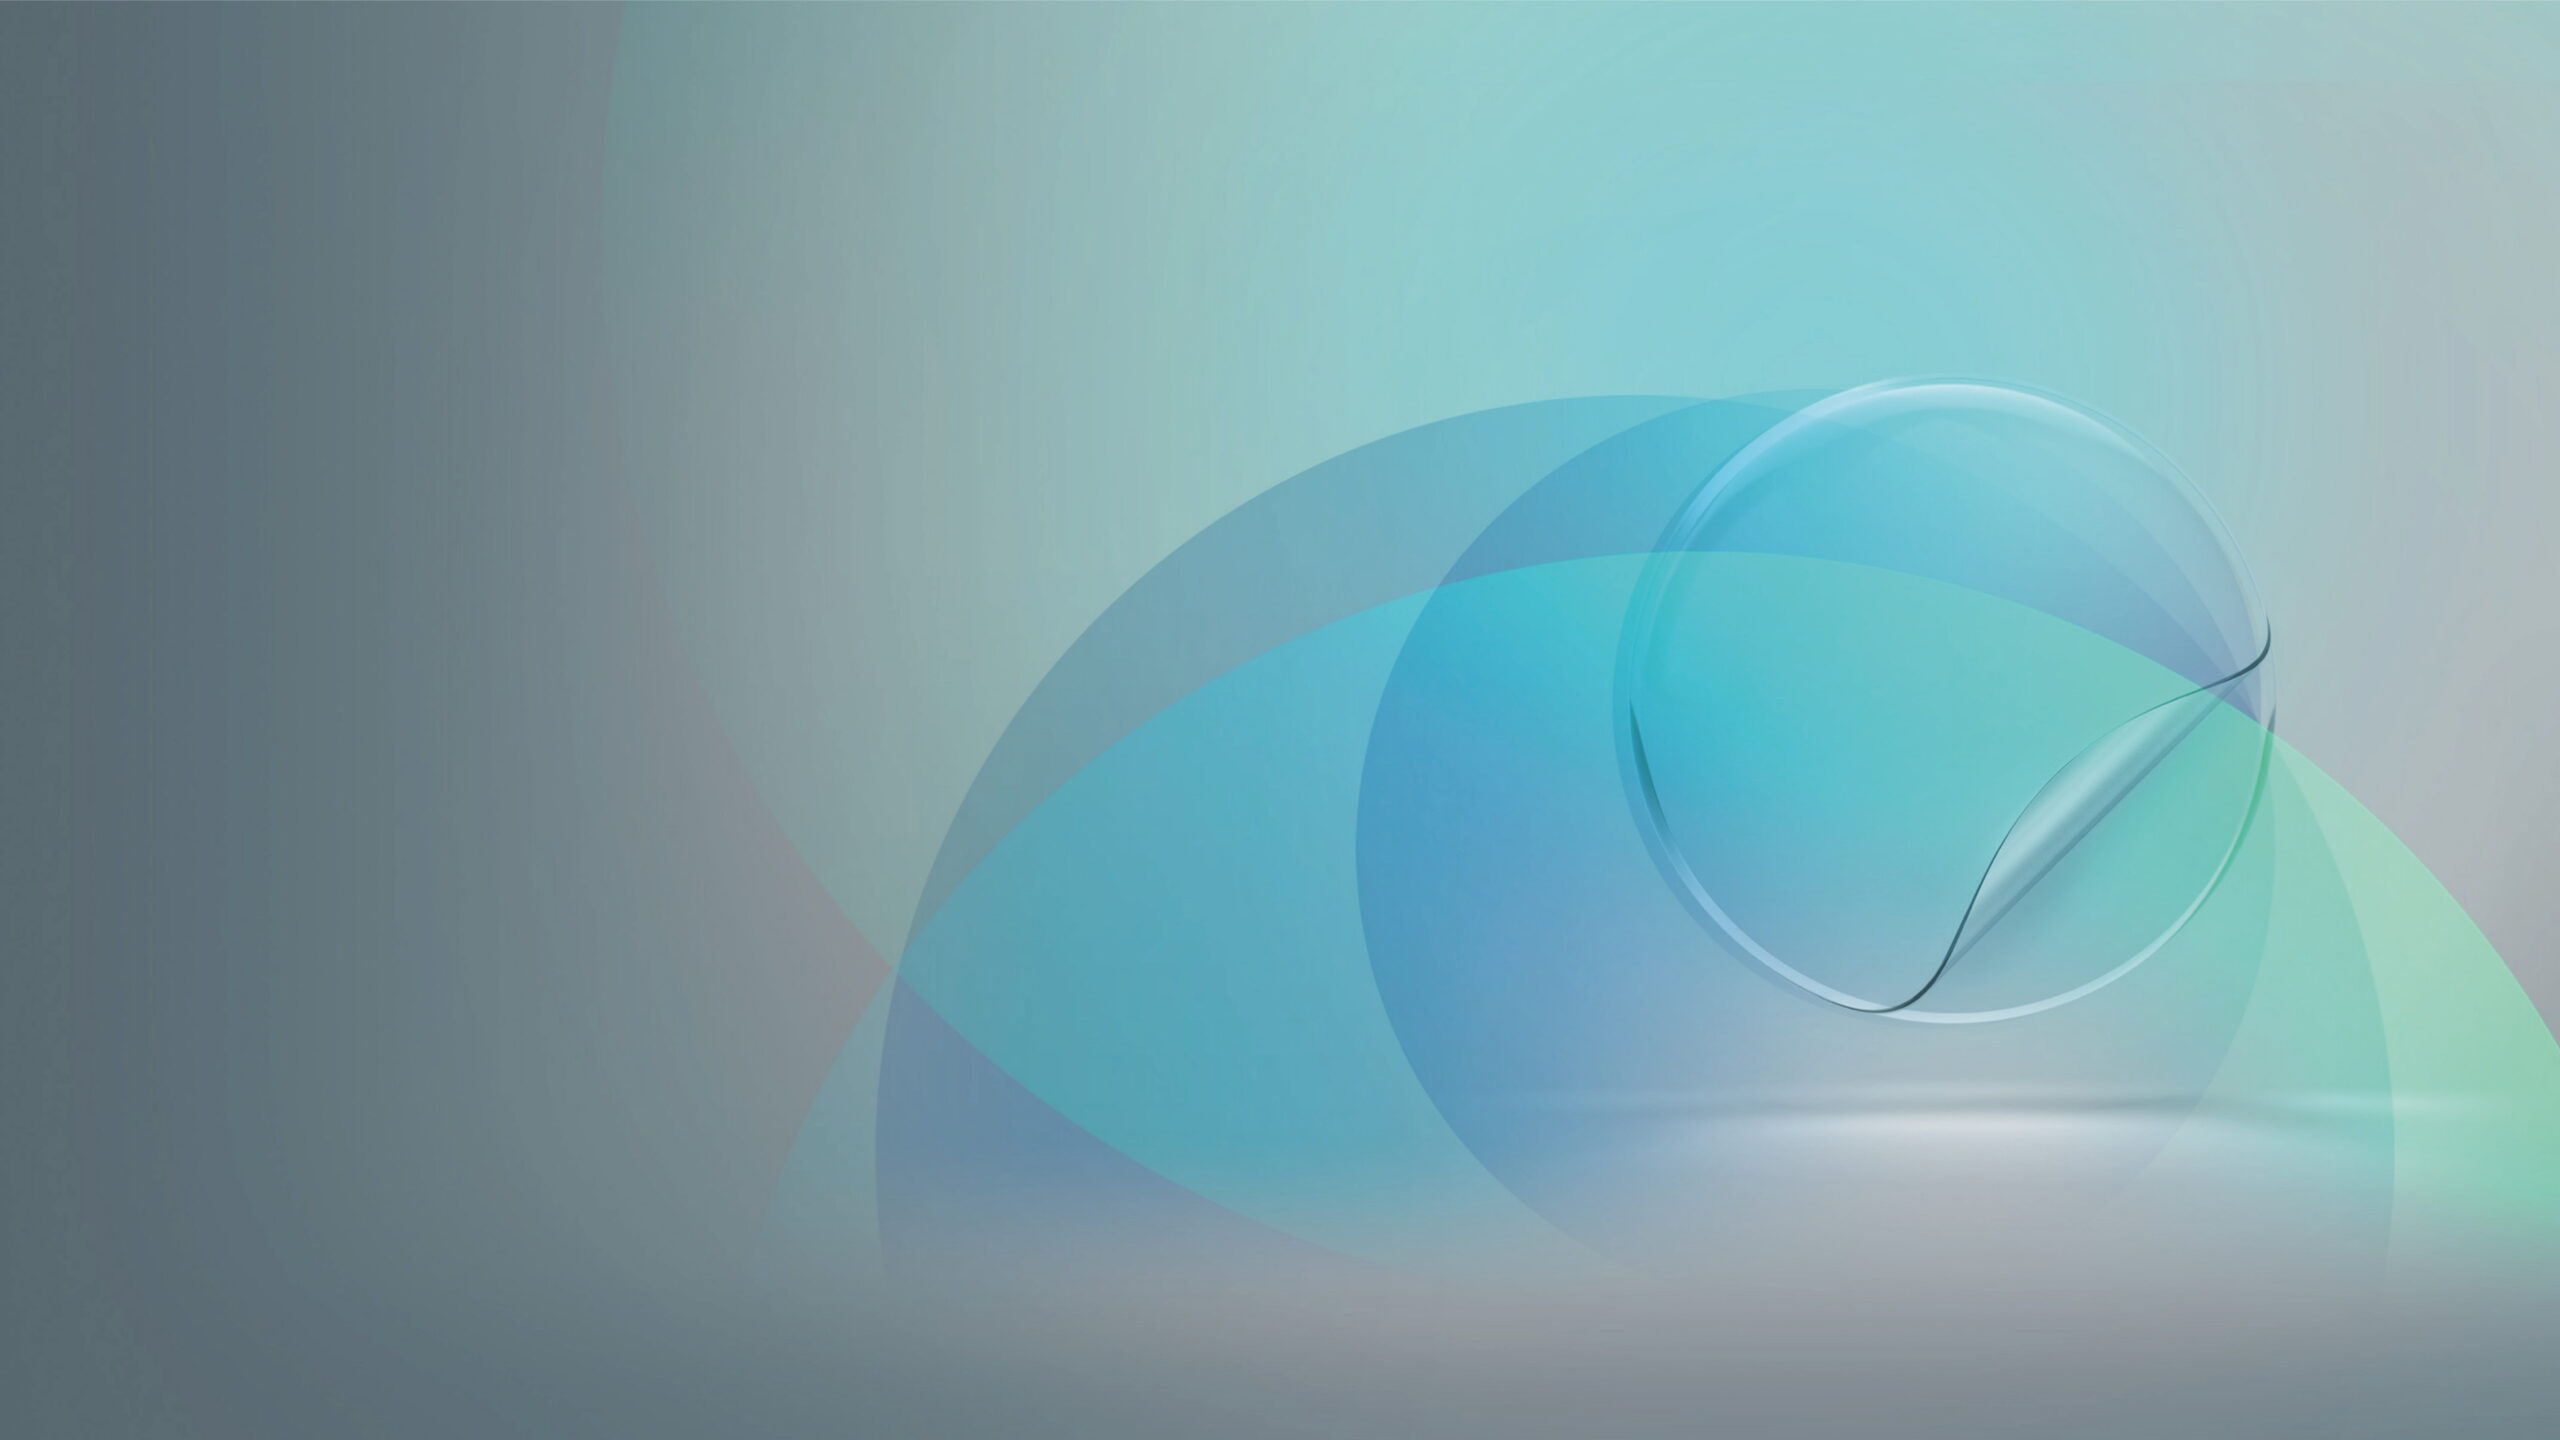 HORIZONS OPTICAL presents the 360° lens coating plan